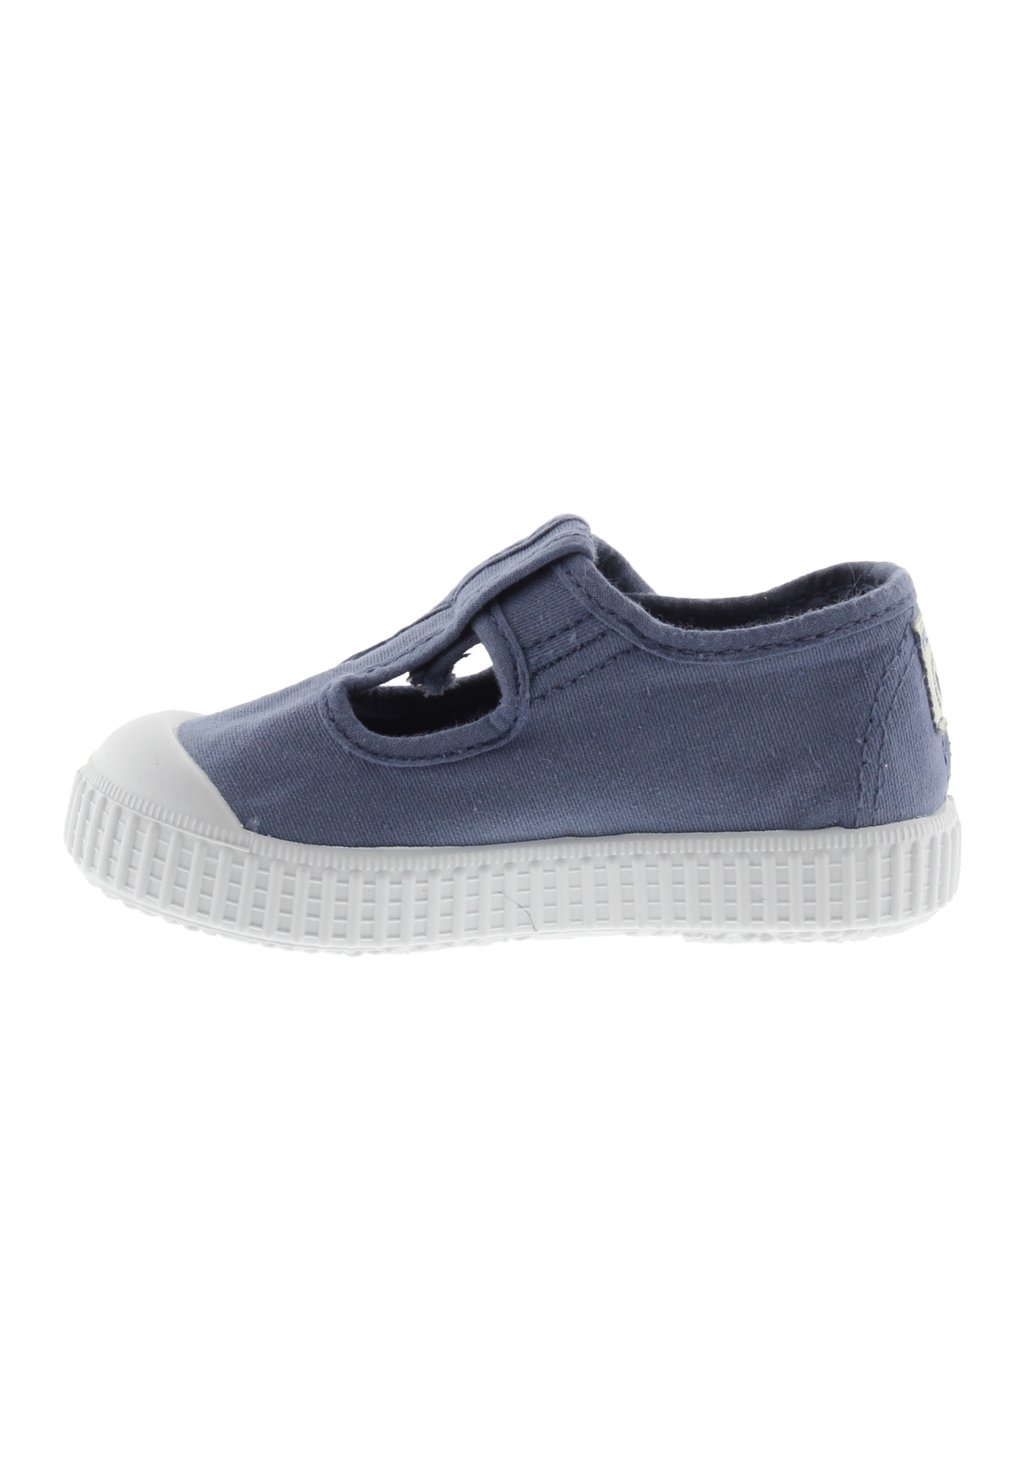 Кроссовки низкие LONA MARINO Victoria Shoes, цвет azul кроссовки victoria shoes zapatillas azul marino